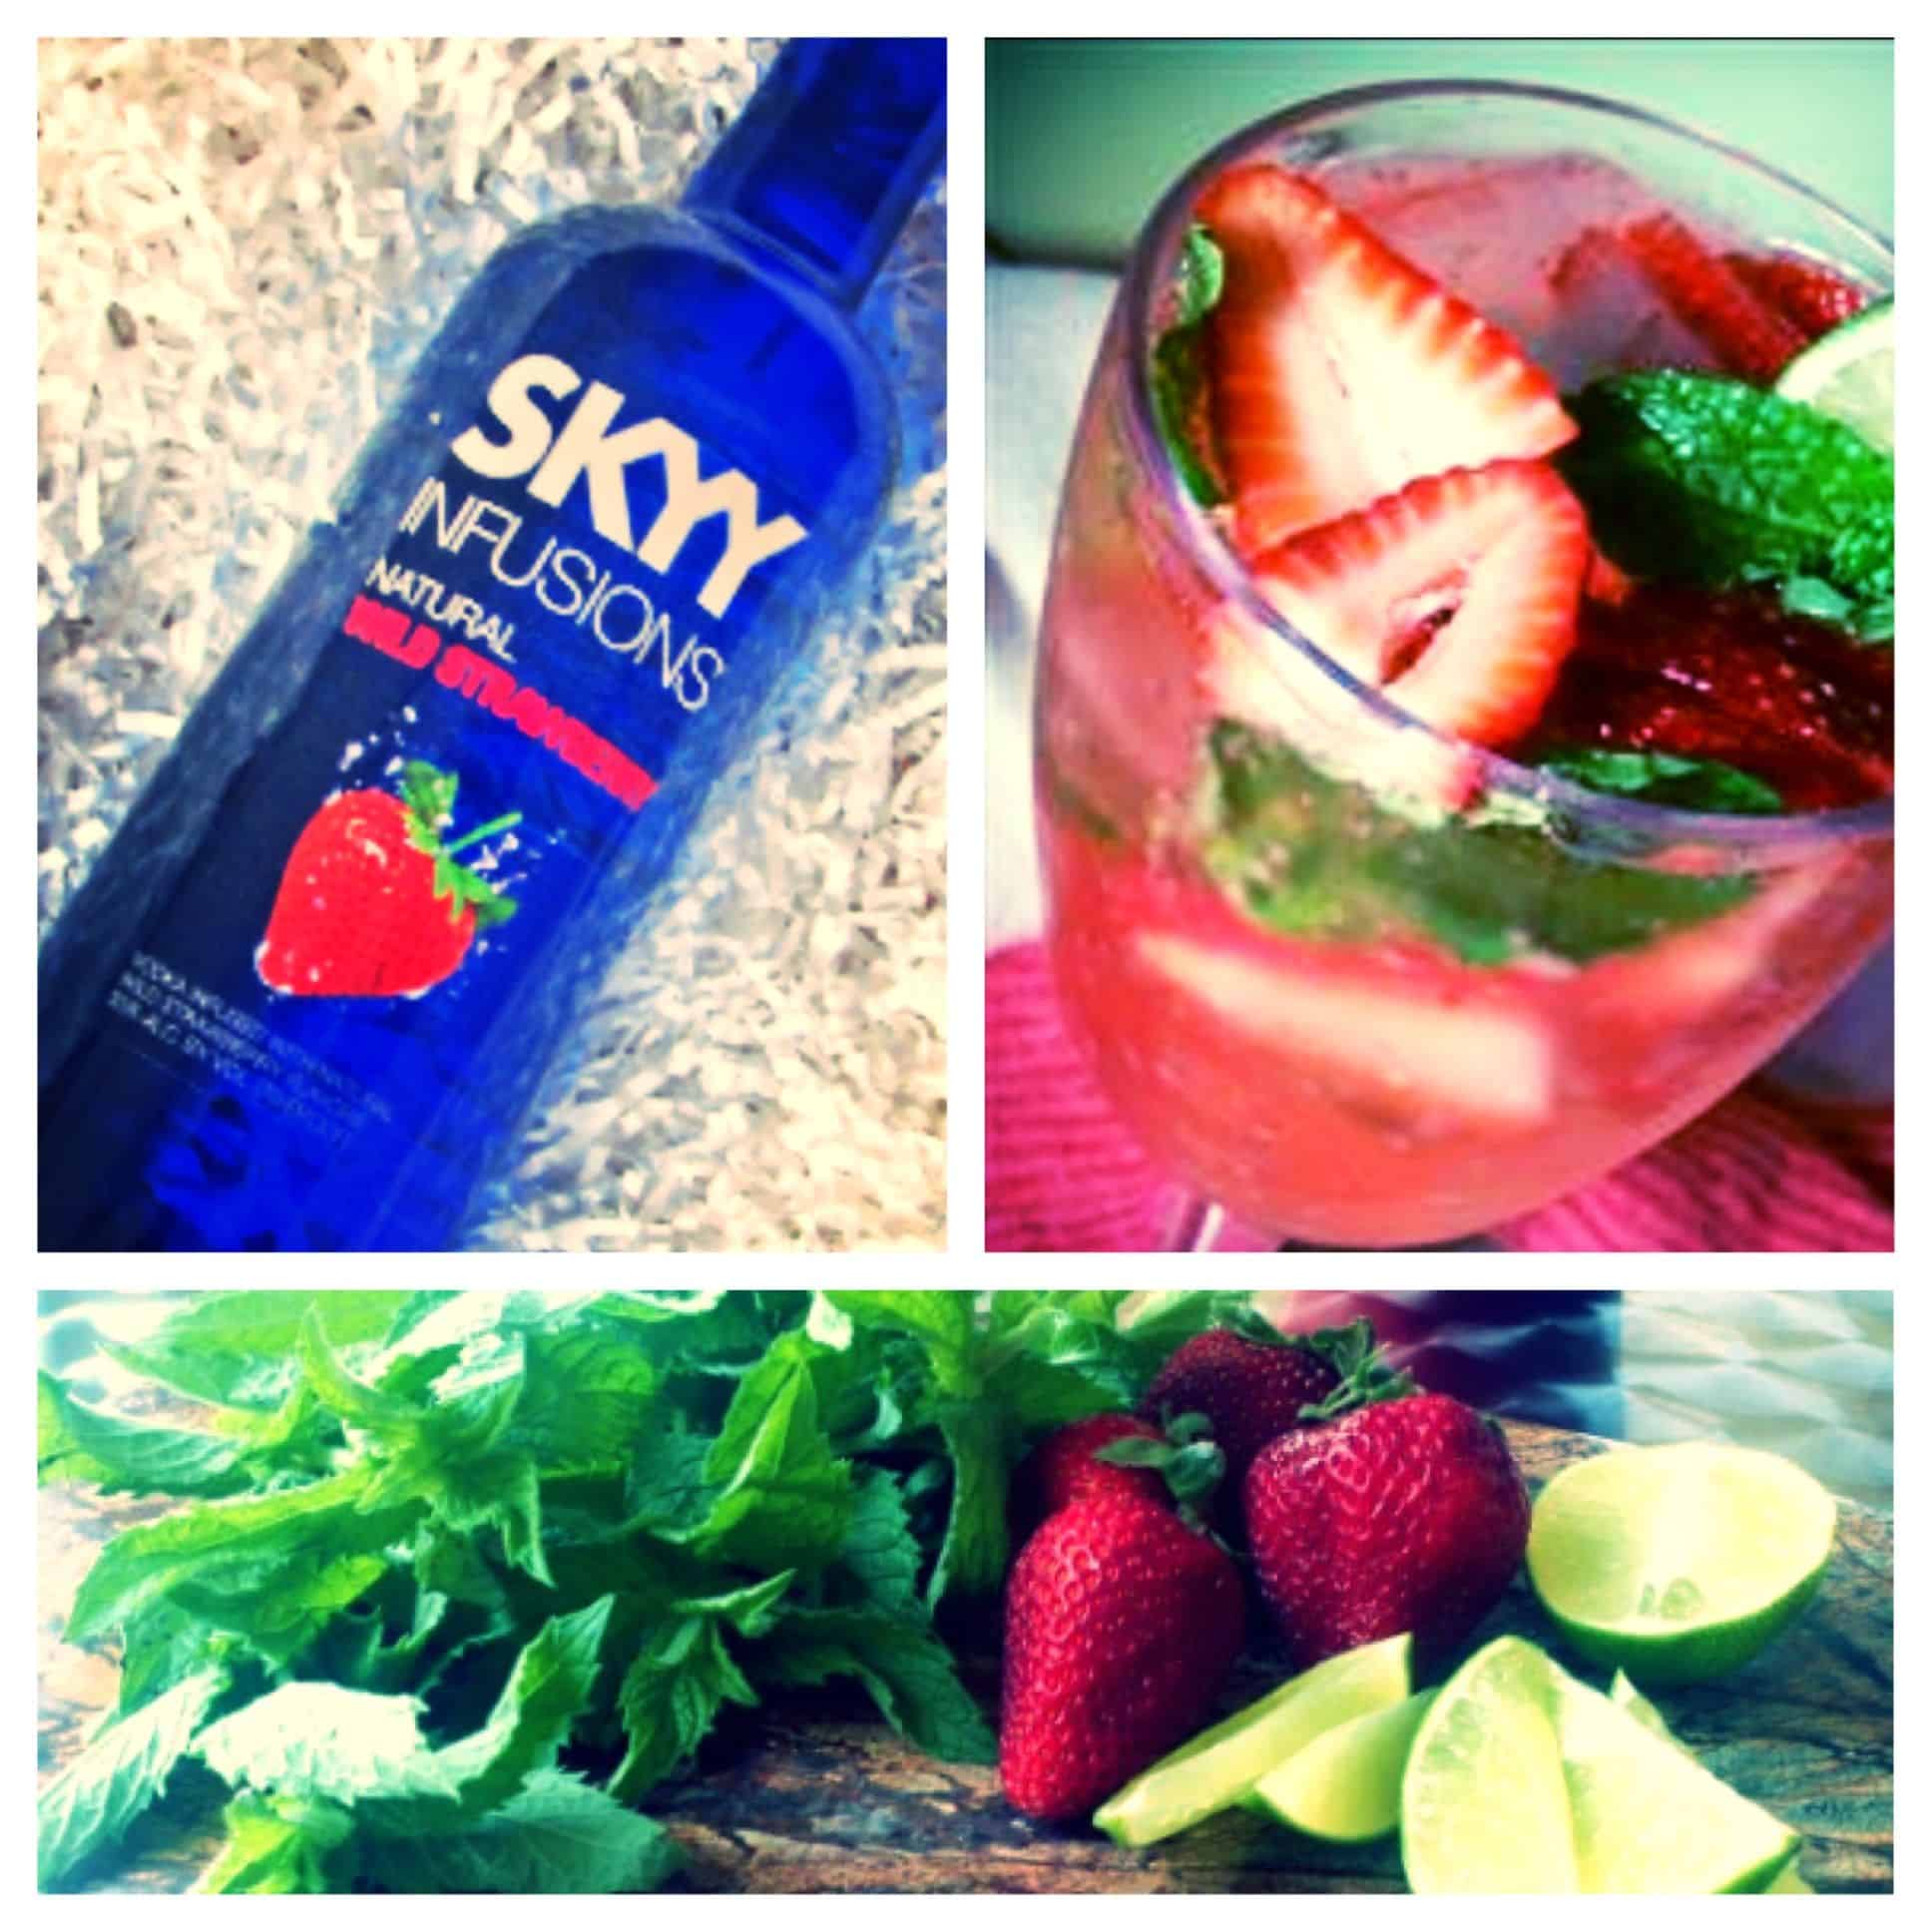 Skyy Wild Strawberry Vodka, Limes, strawberries, mint and club soda ...